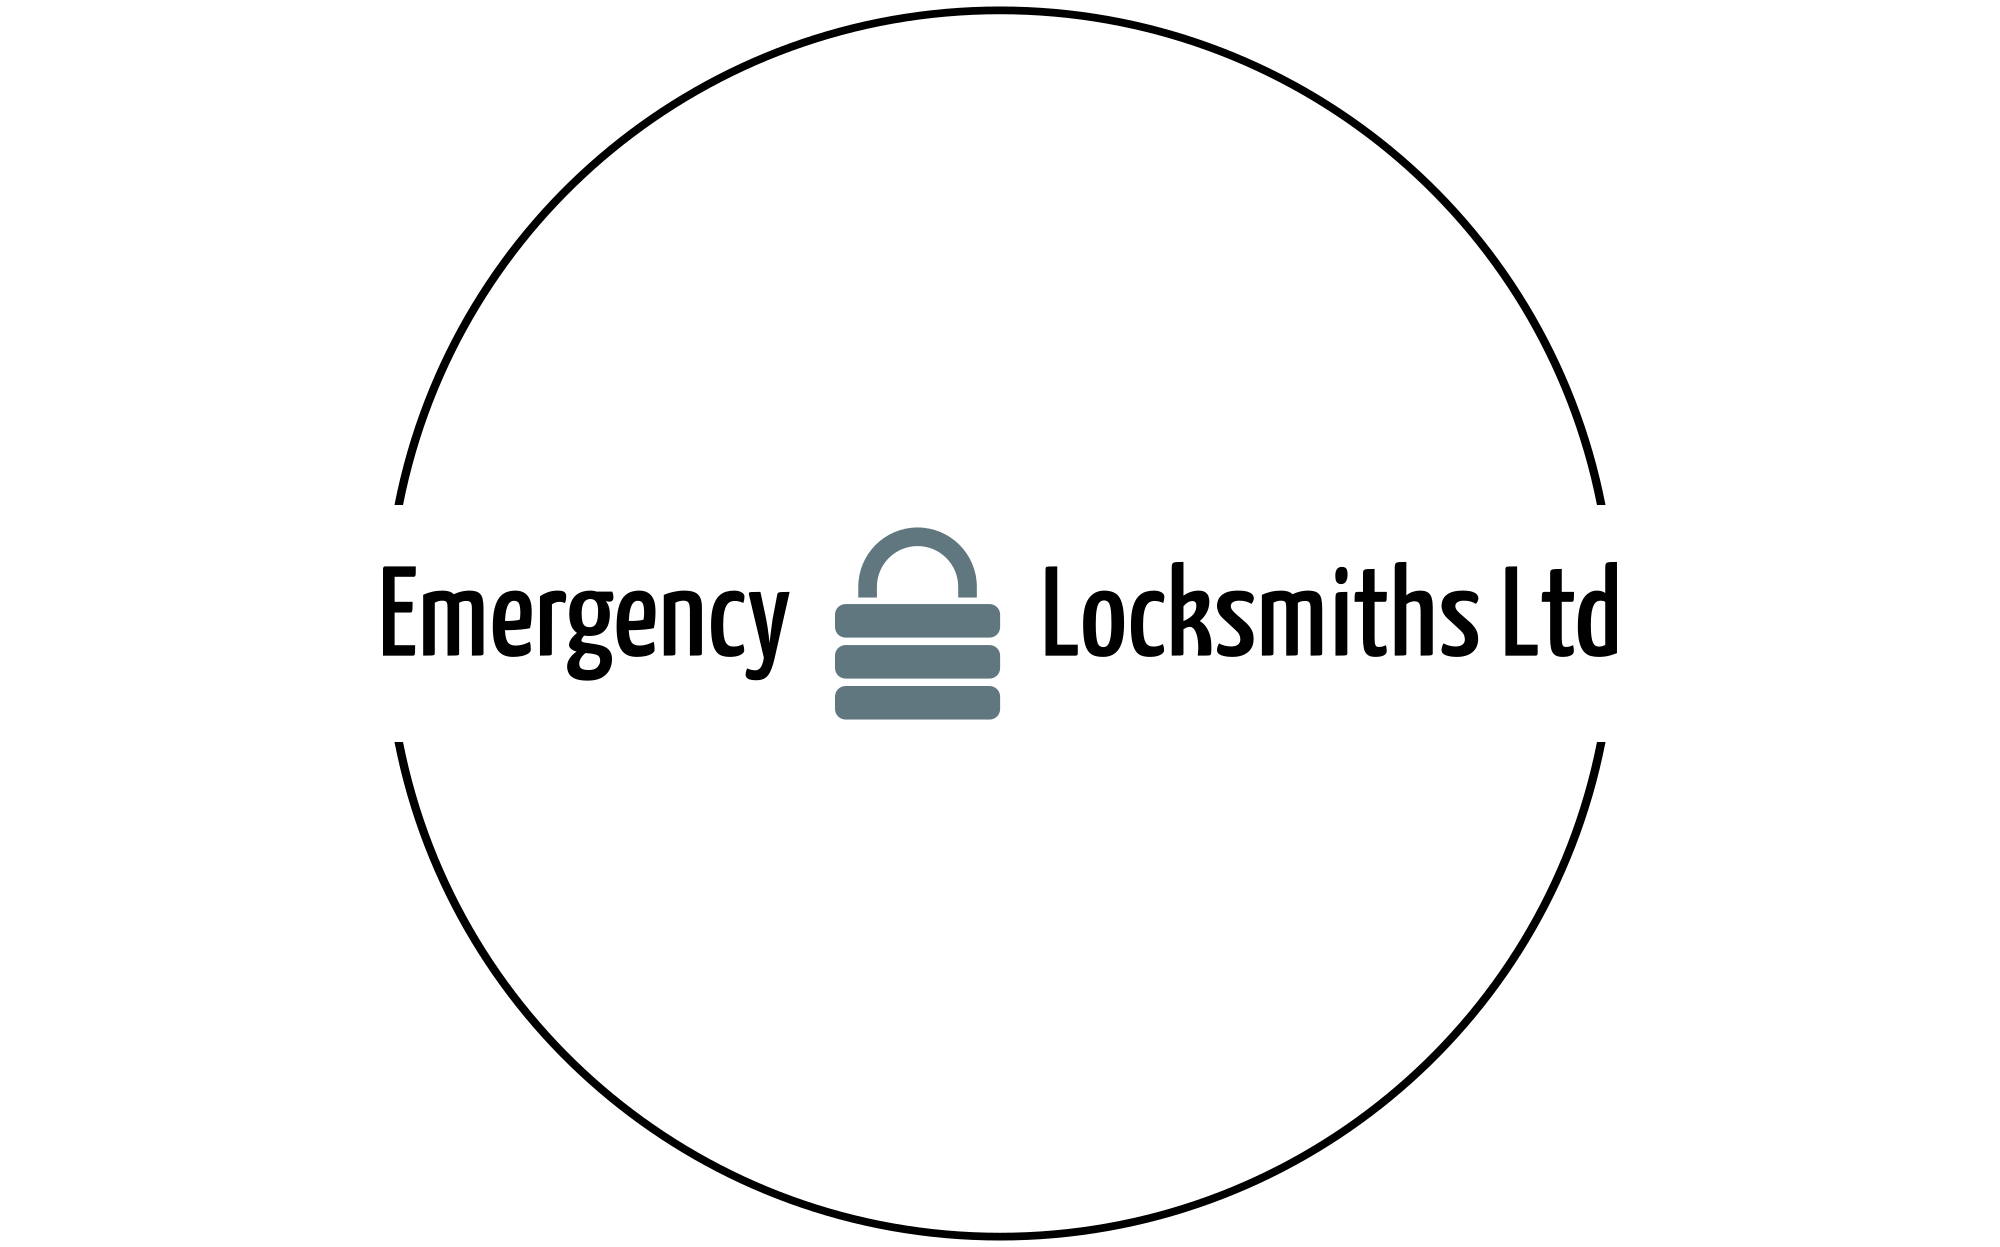 emergency-locksmiths-ltd-high-resolution-logo-transparent